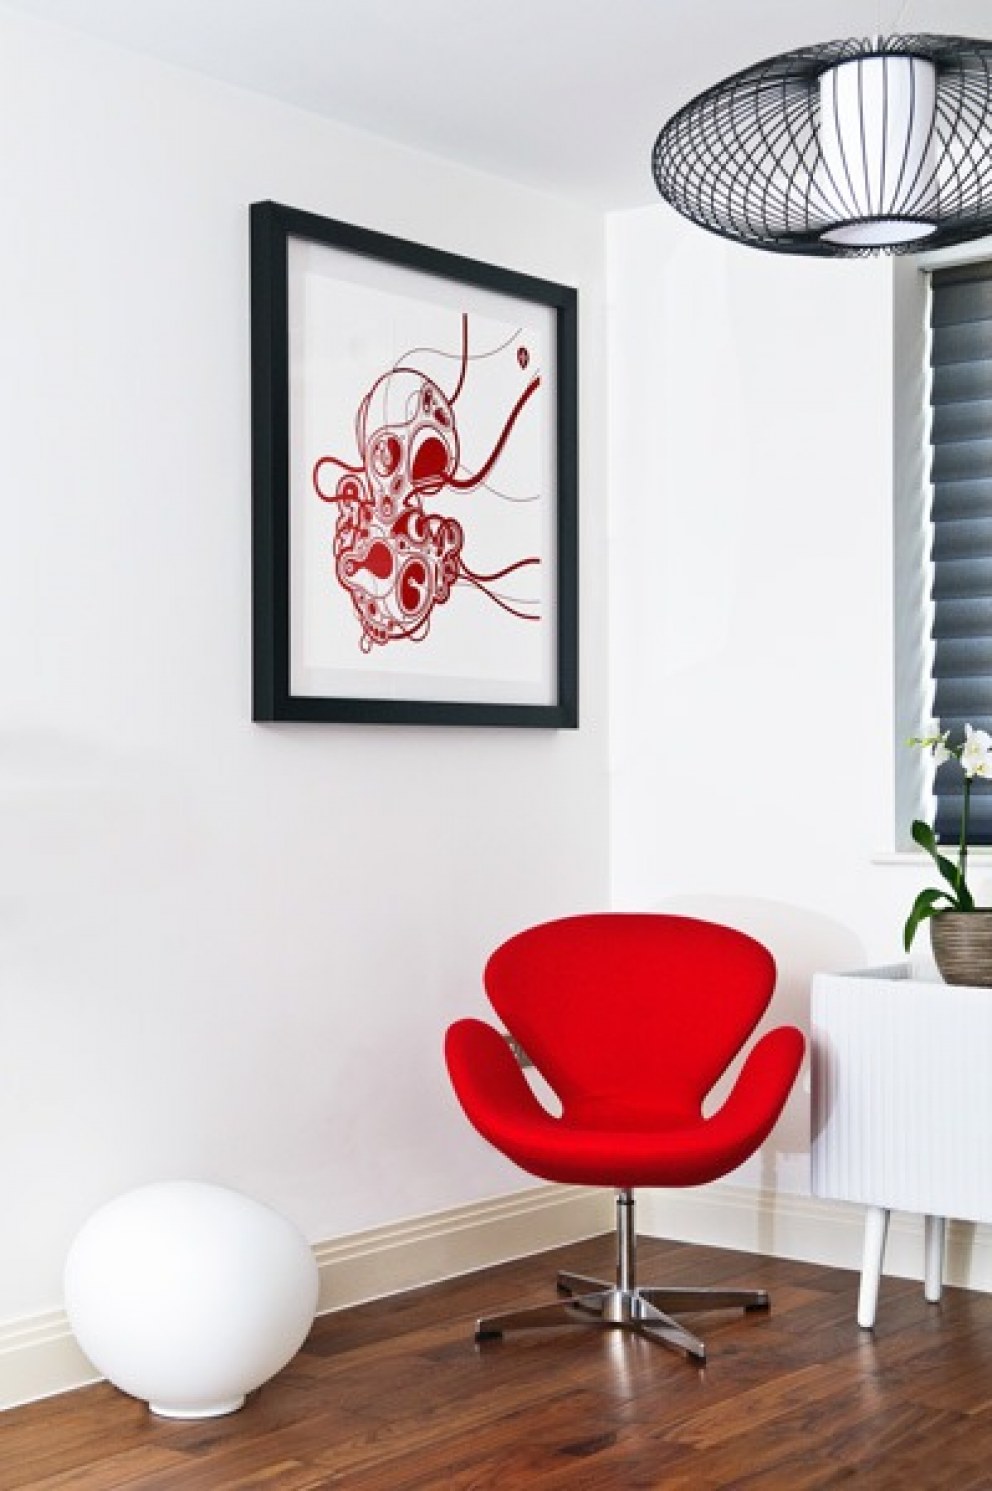 Walton, Bucks | Living Room | Interior Designers